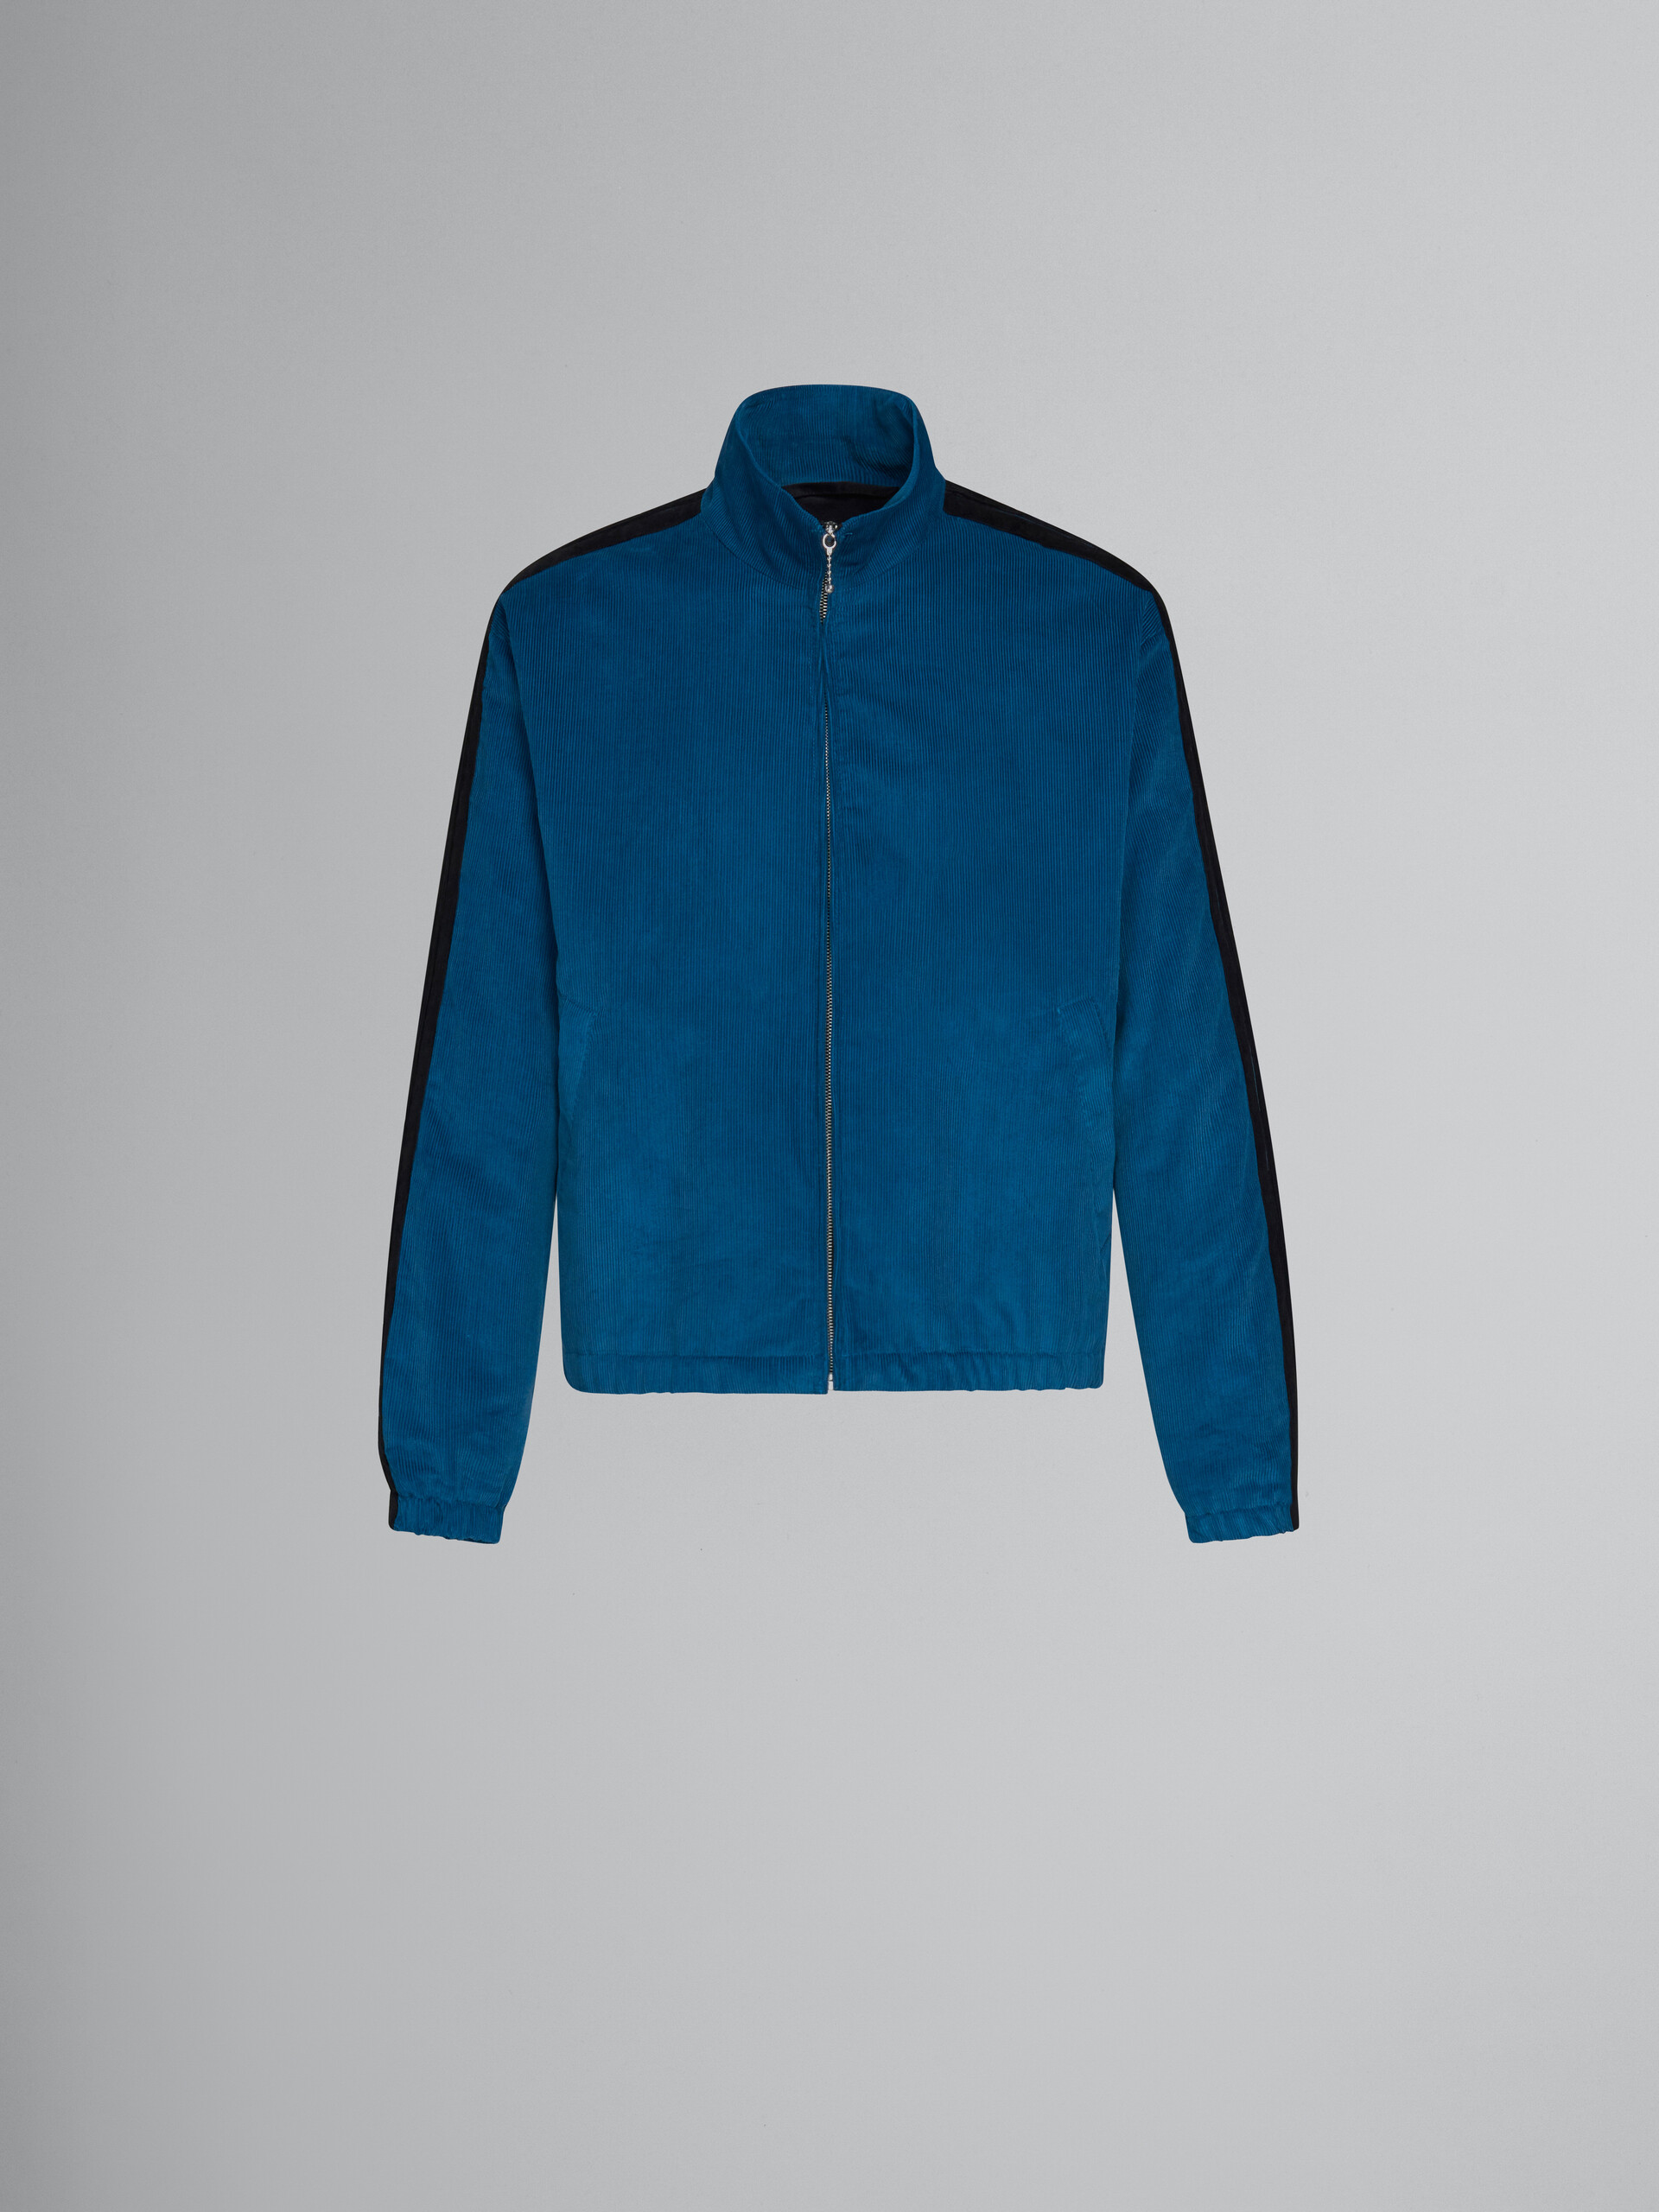 Blue corduroy jacket with side bands - Jackets - Image 1